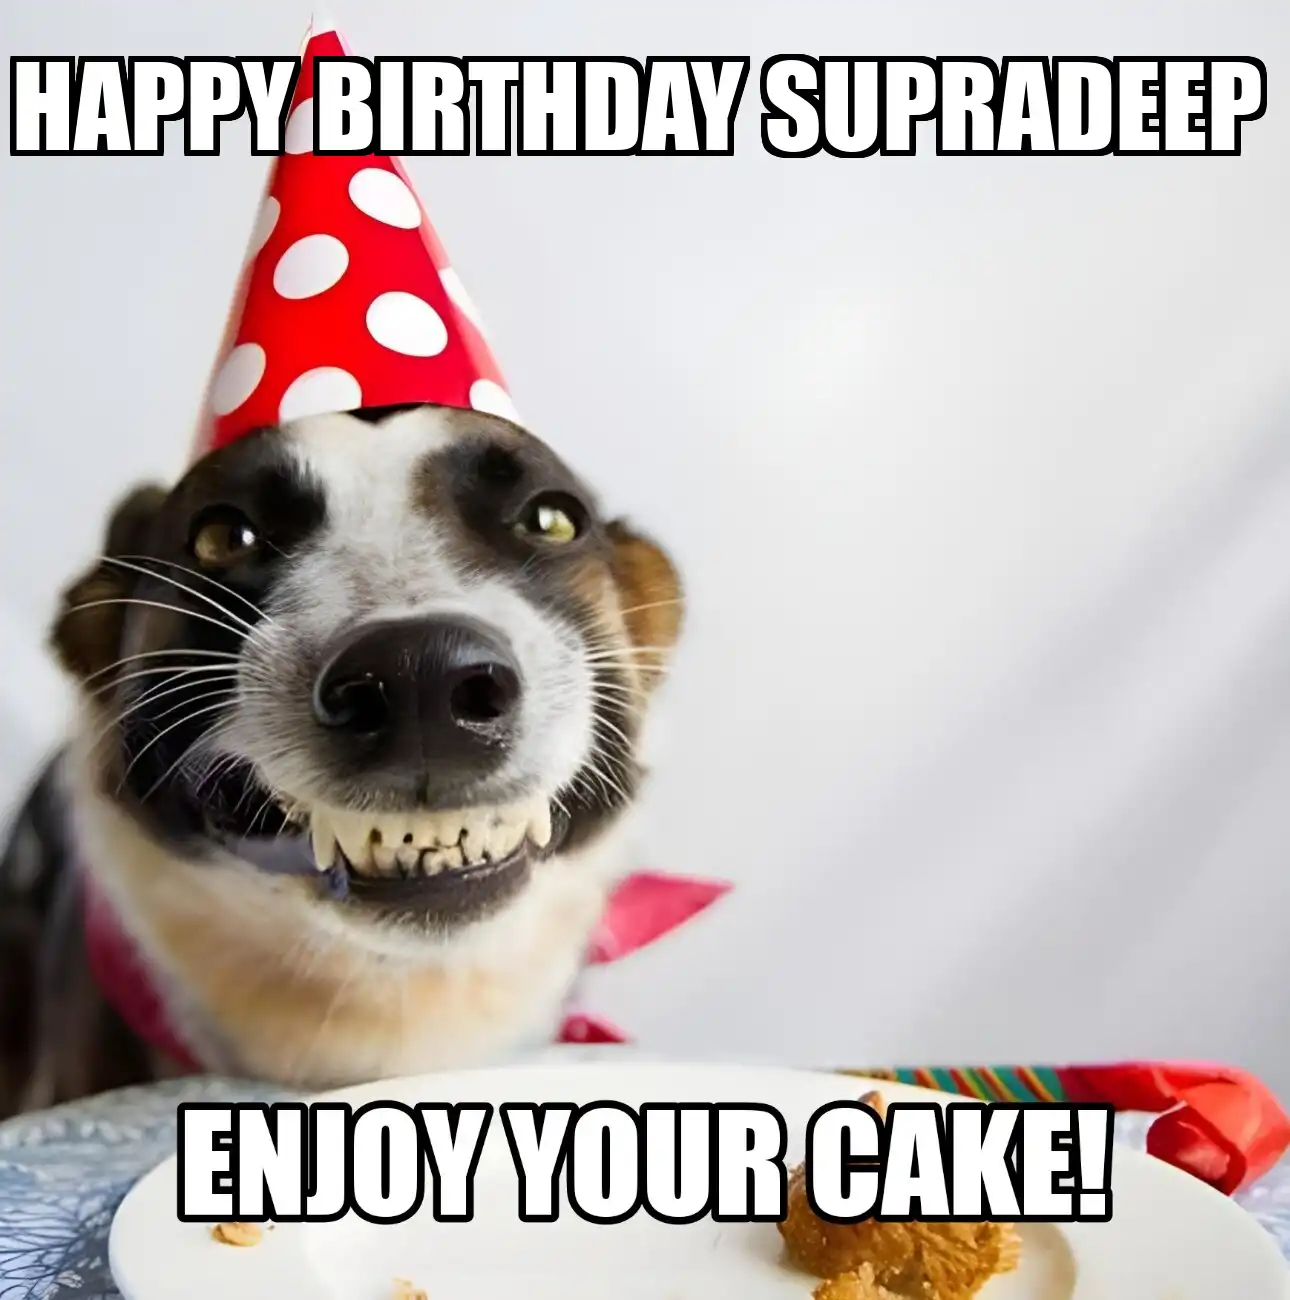 Happy Birthday Supradeep Enjoy Your Cake Dog Meme